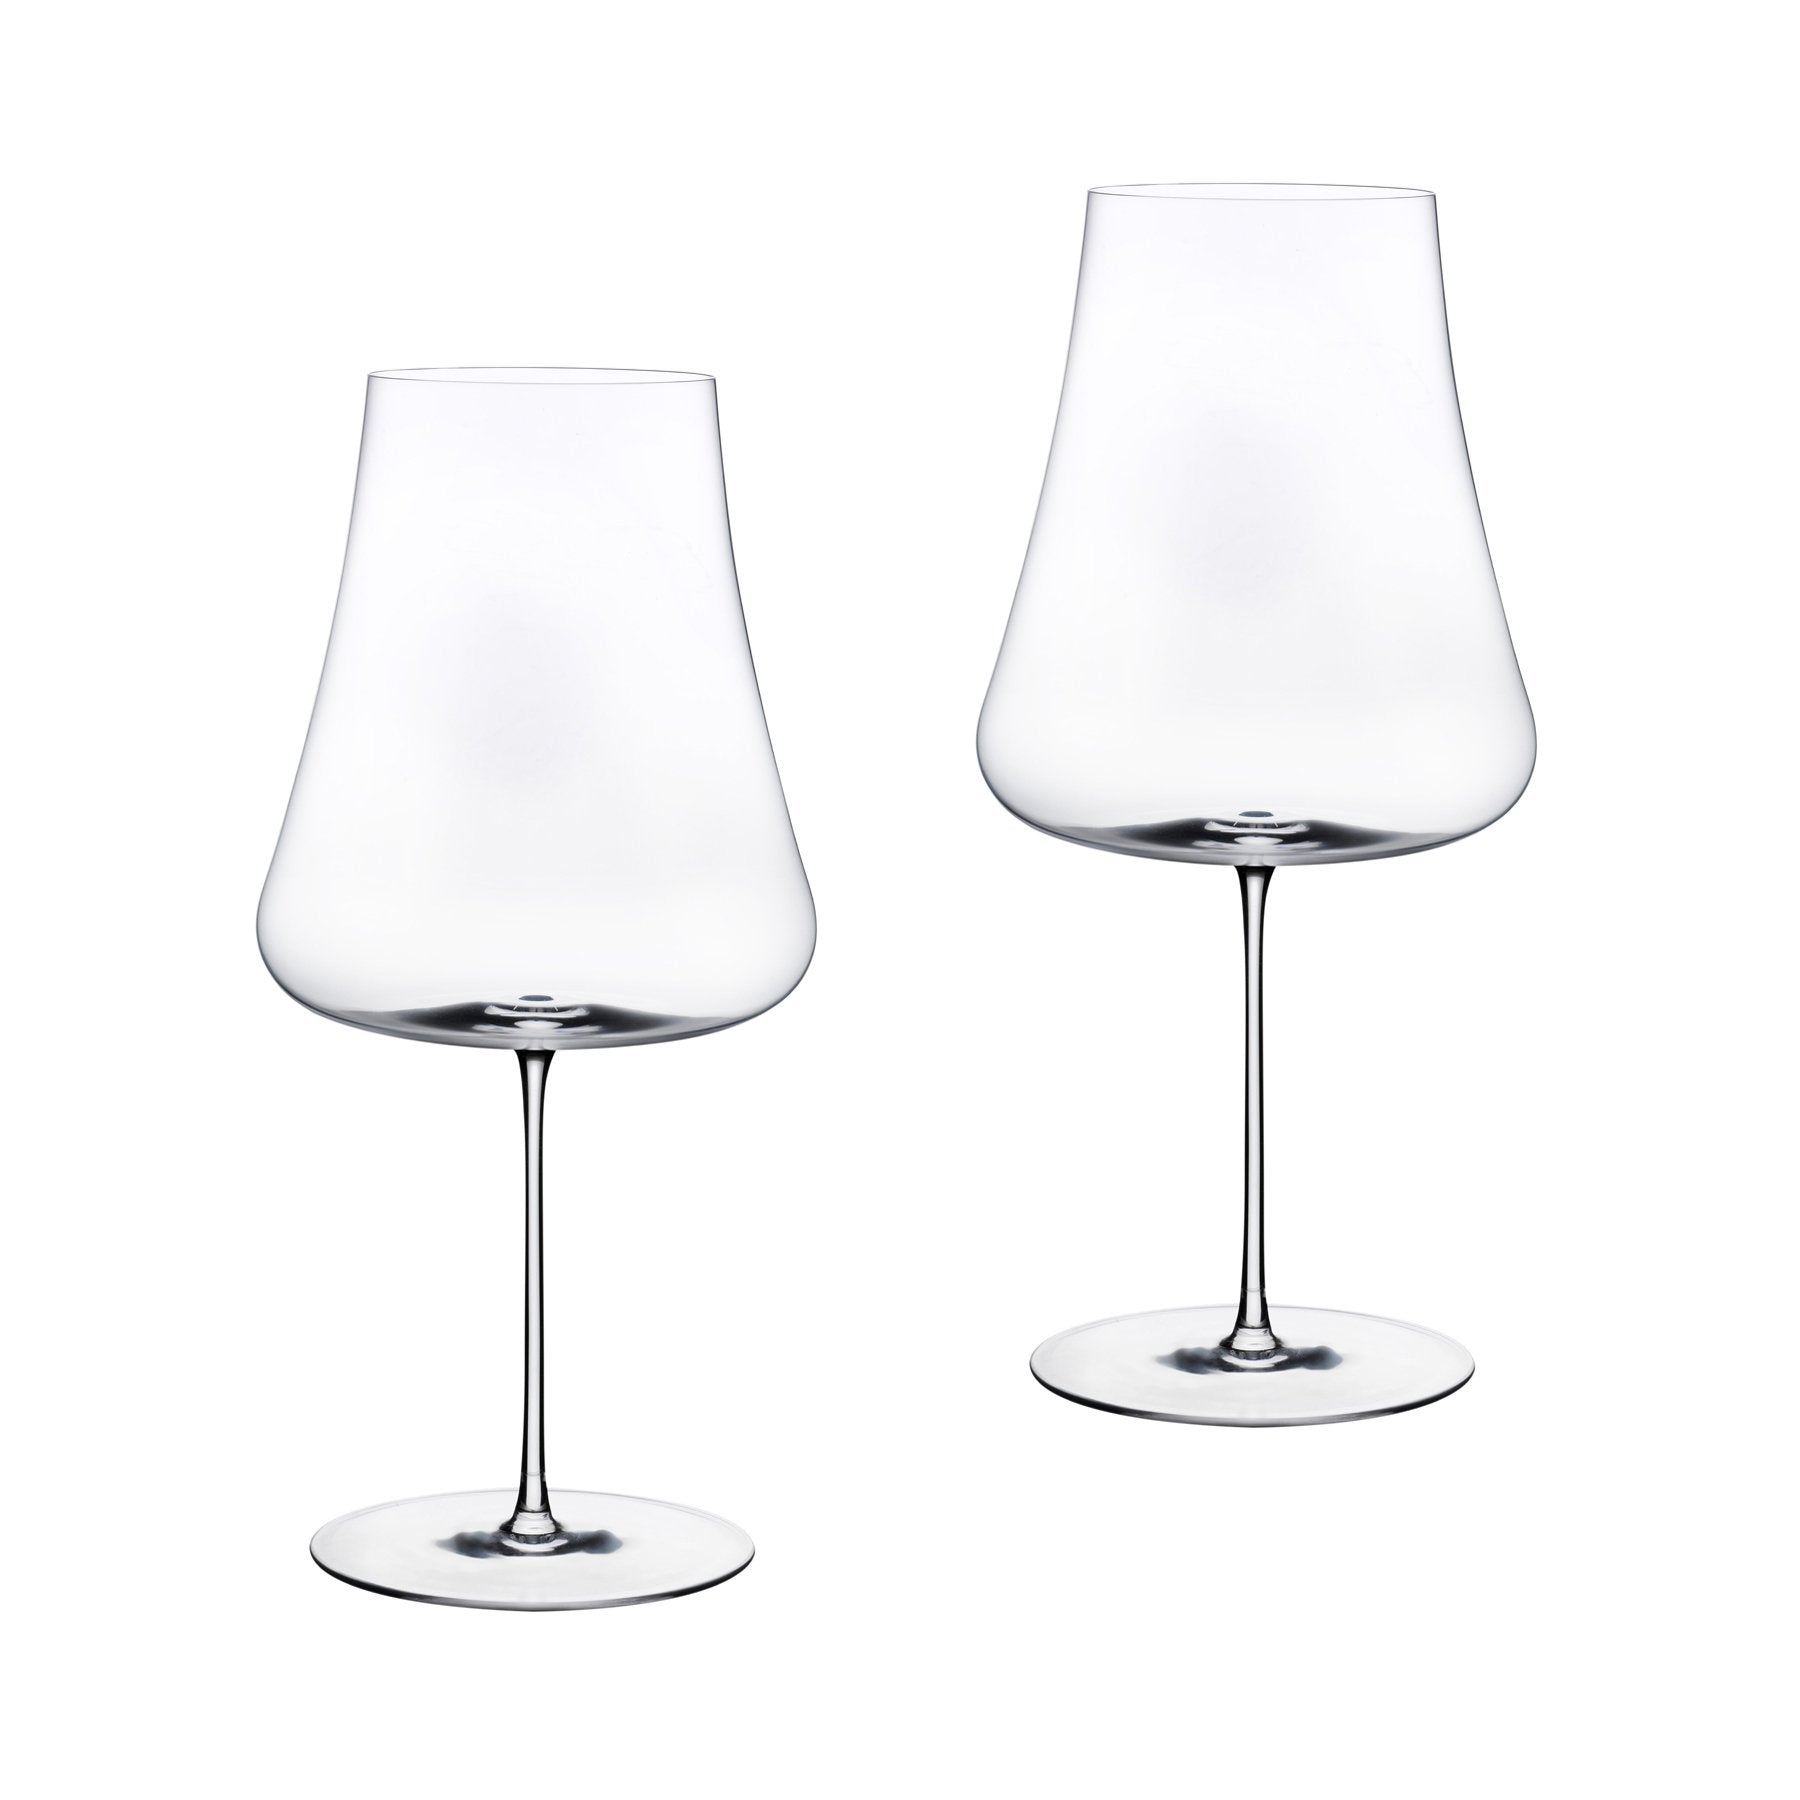 Silver & Black Wine Glasses Set of 2